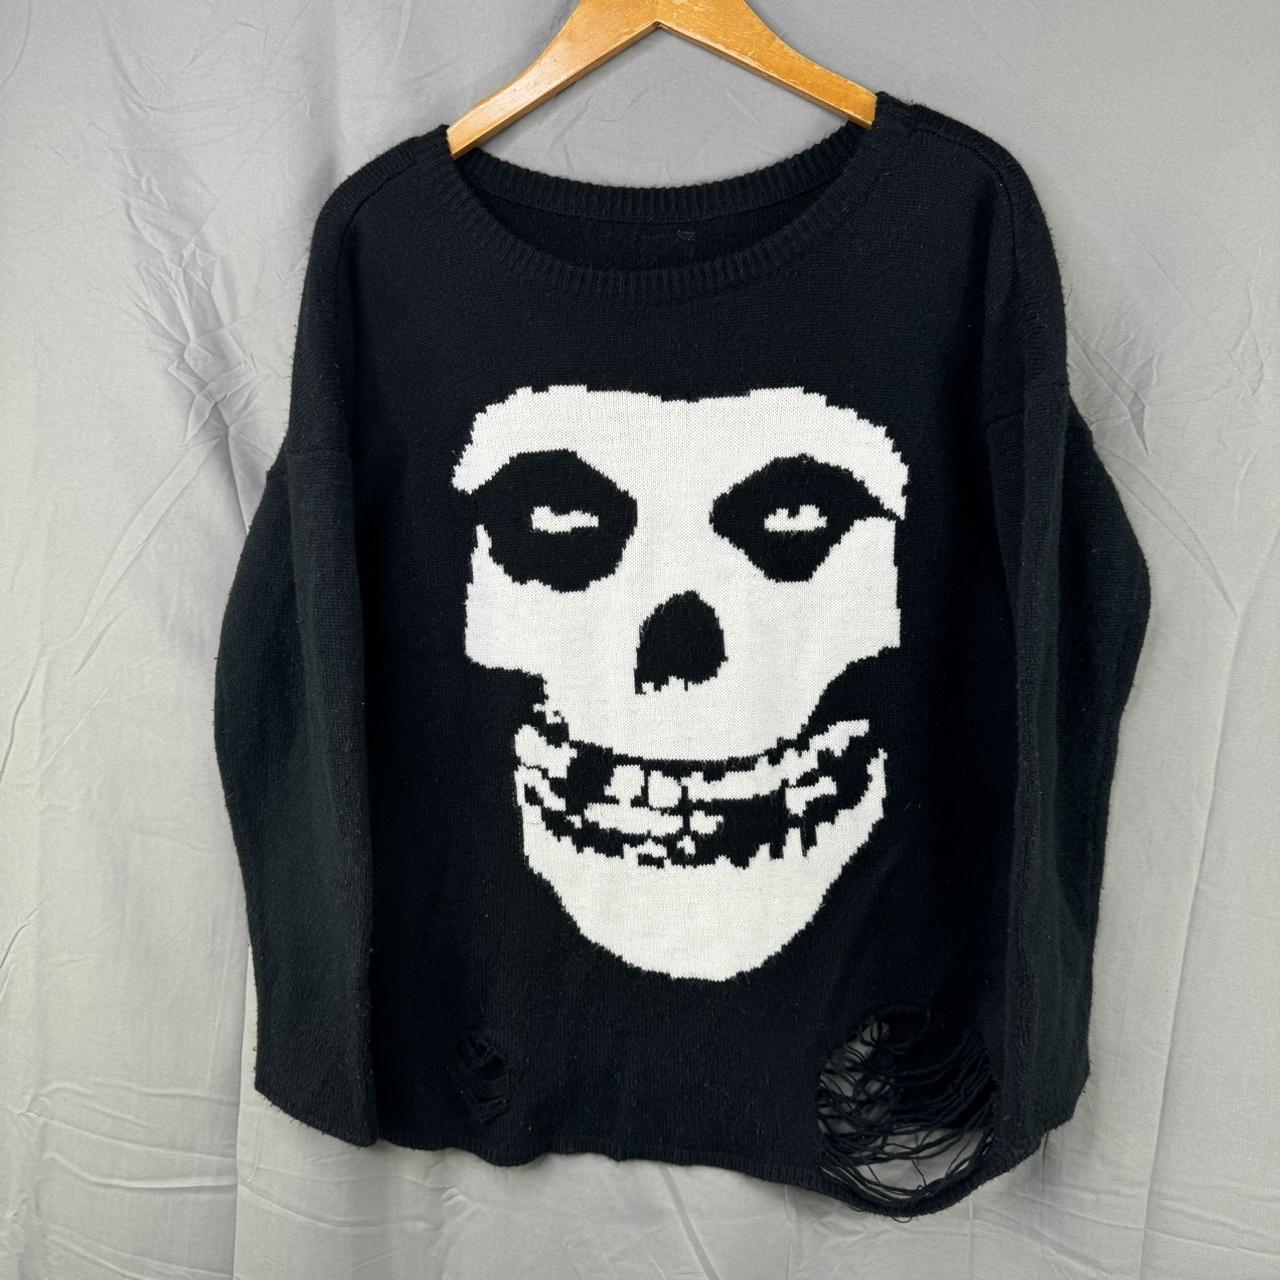 Mall Goth Misfits Skeleton Skull Distressed Crewneck... - Depop